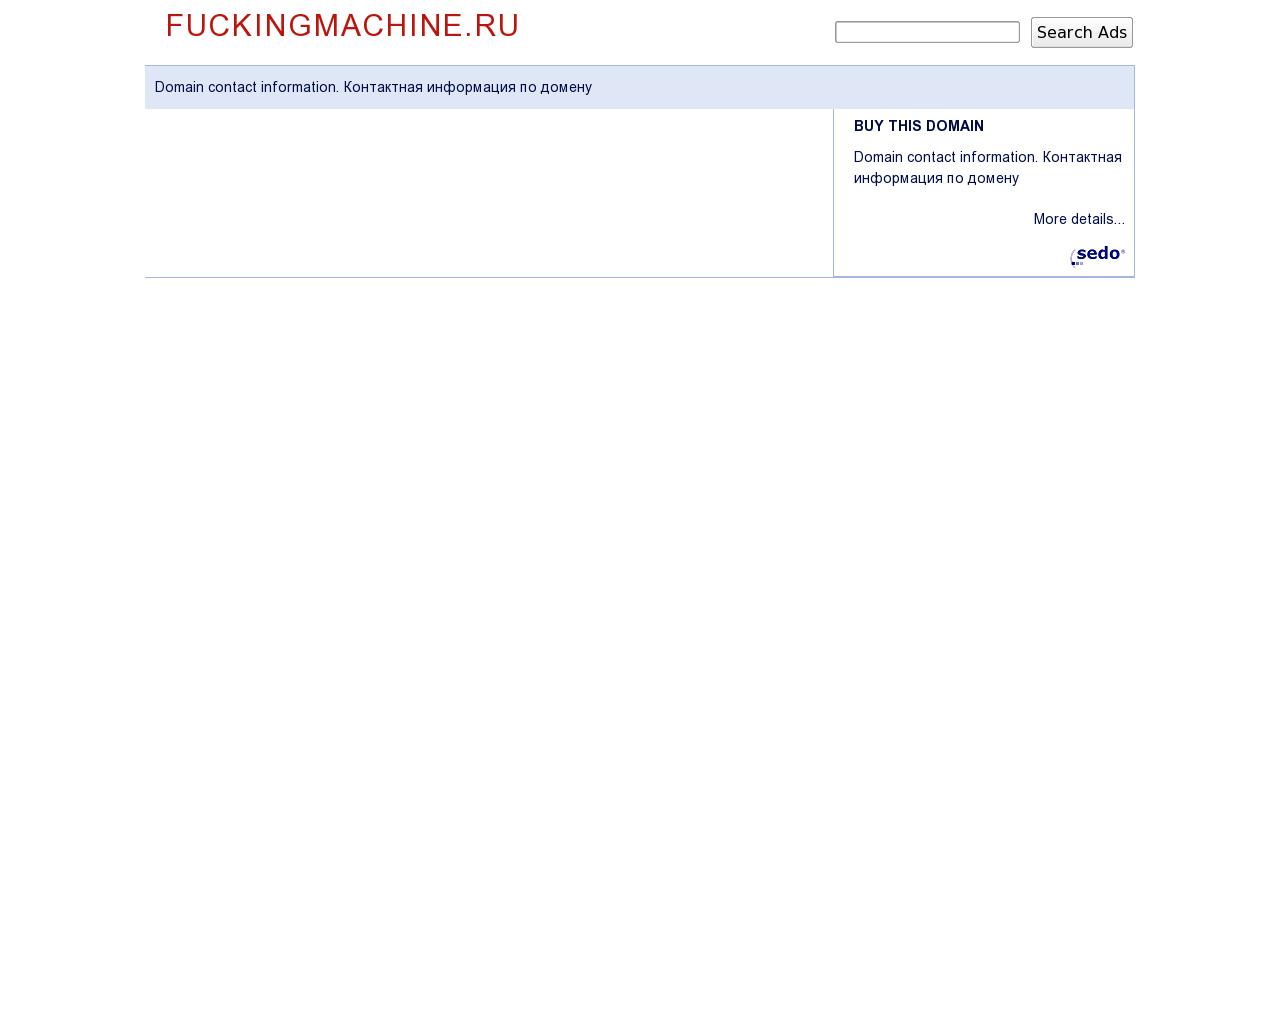 Изображение сайта fuckingmachine.ru в разрешении 1280x1024